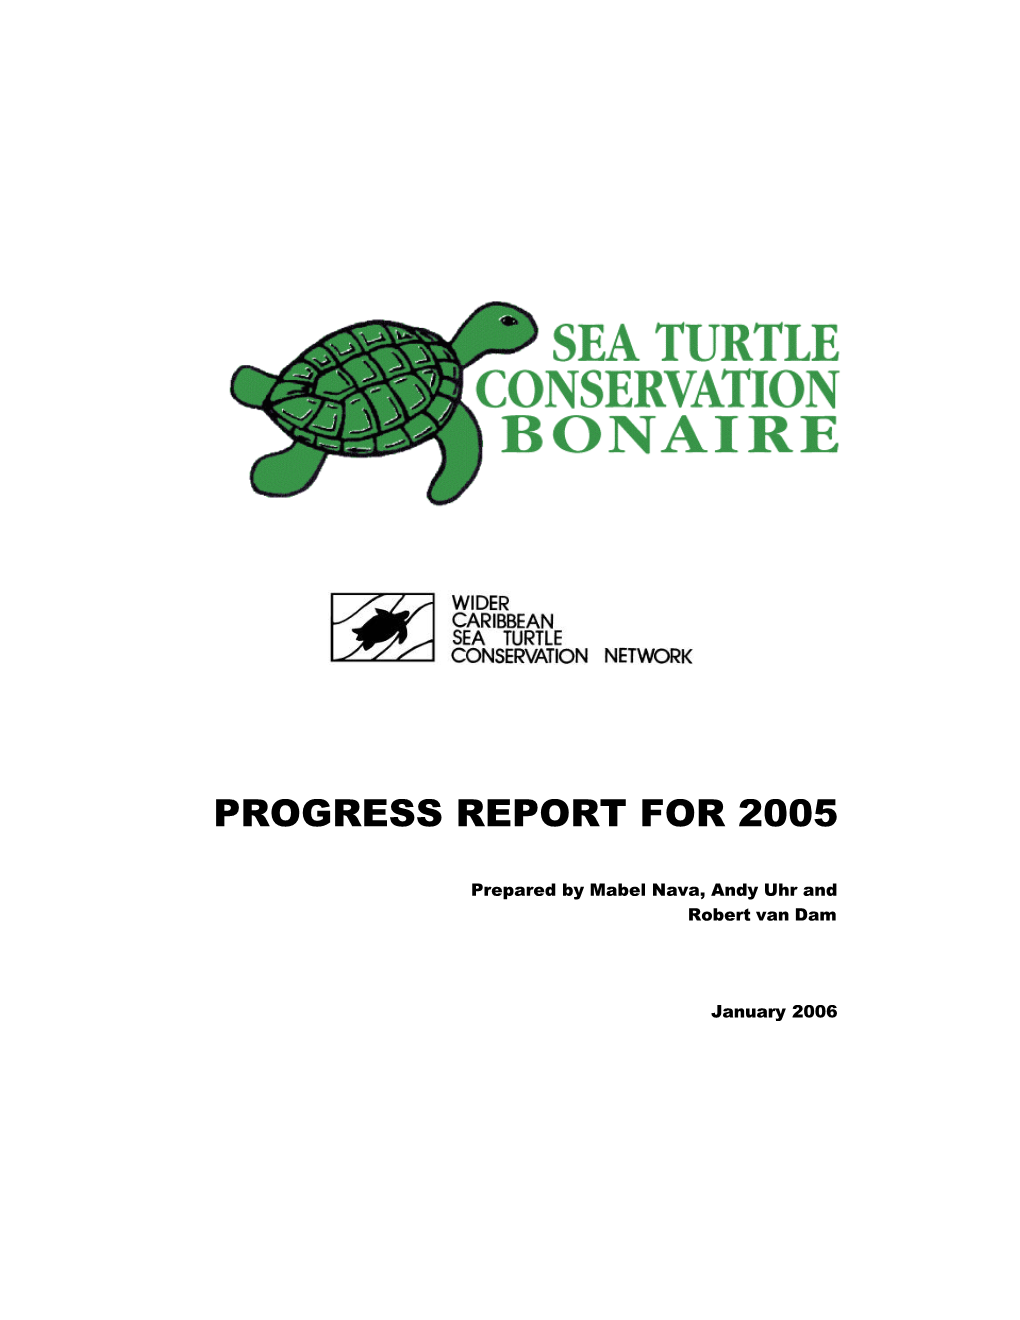 Progress Report for 2005. Sea Turtle Conservation Bonaire